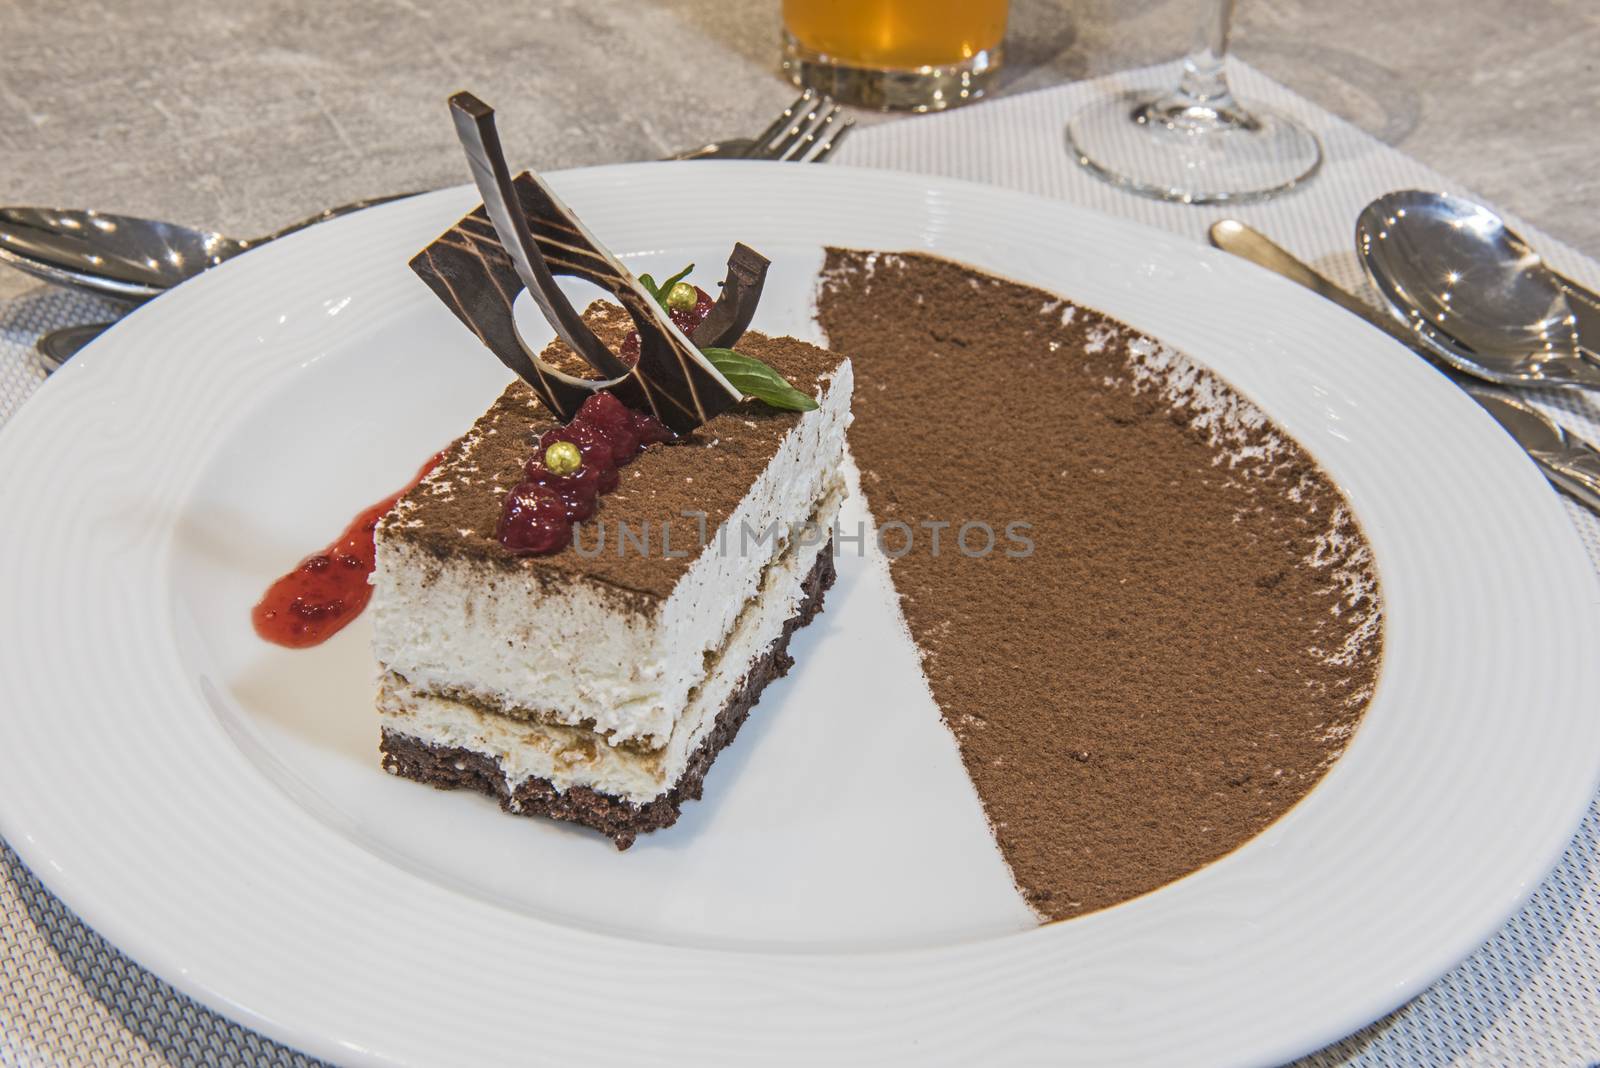 Tiramisu dessert food at luxury a la carte restaurant with cocoa